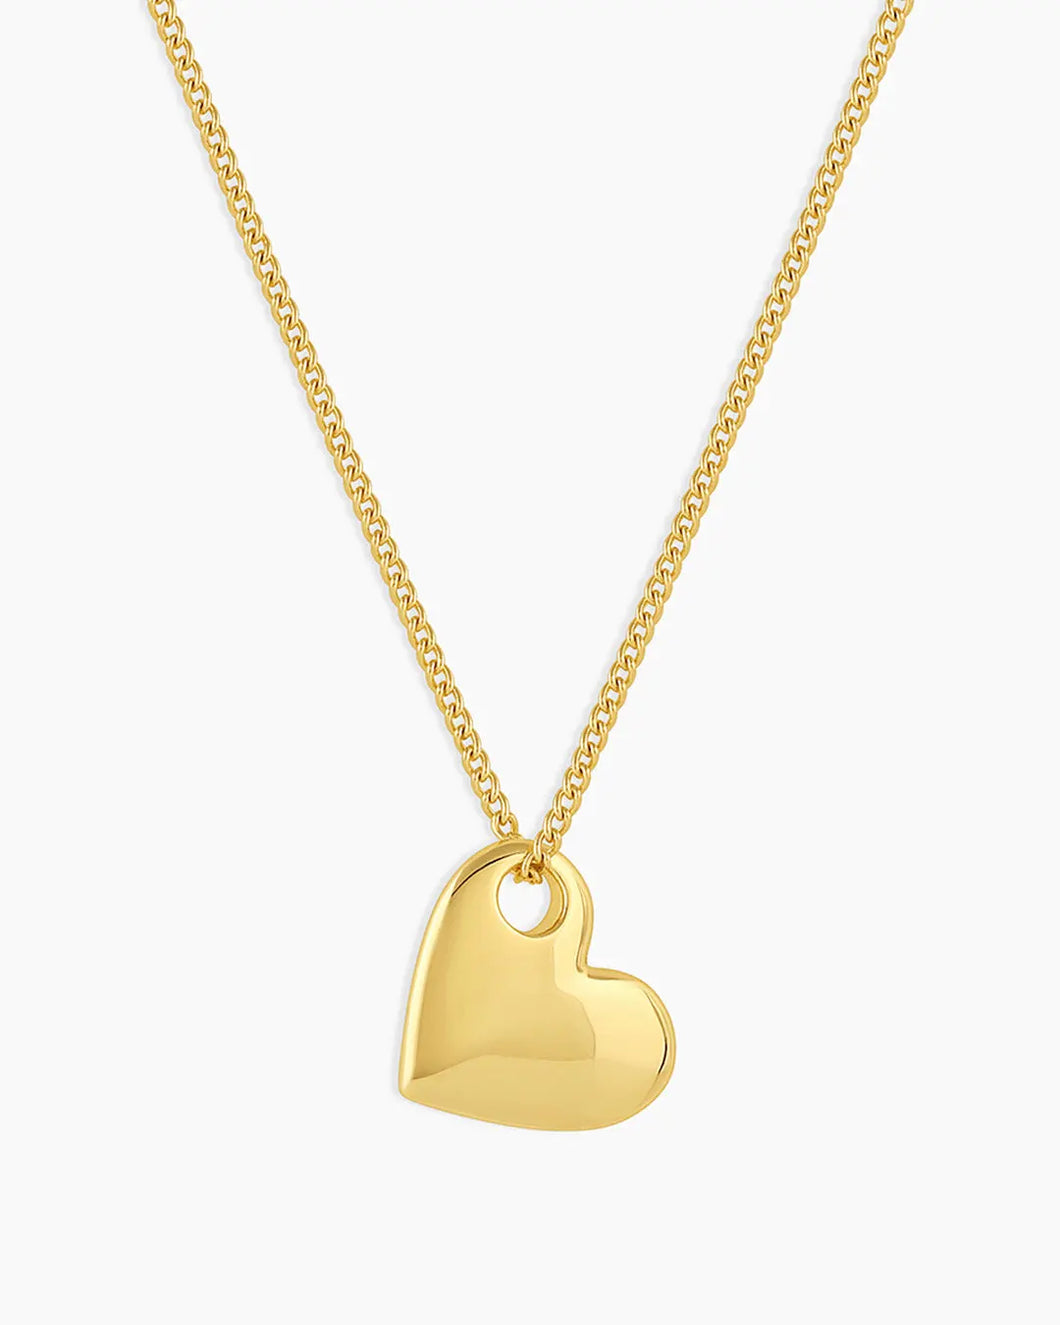 GOR Lou Heart Pendant Necklace